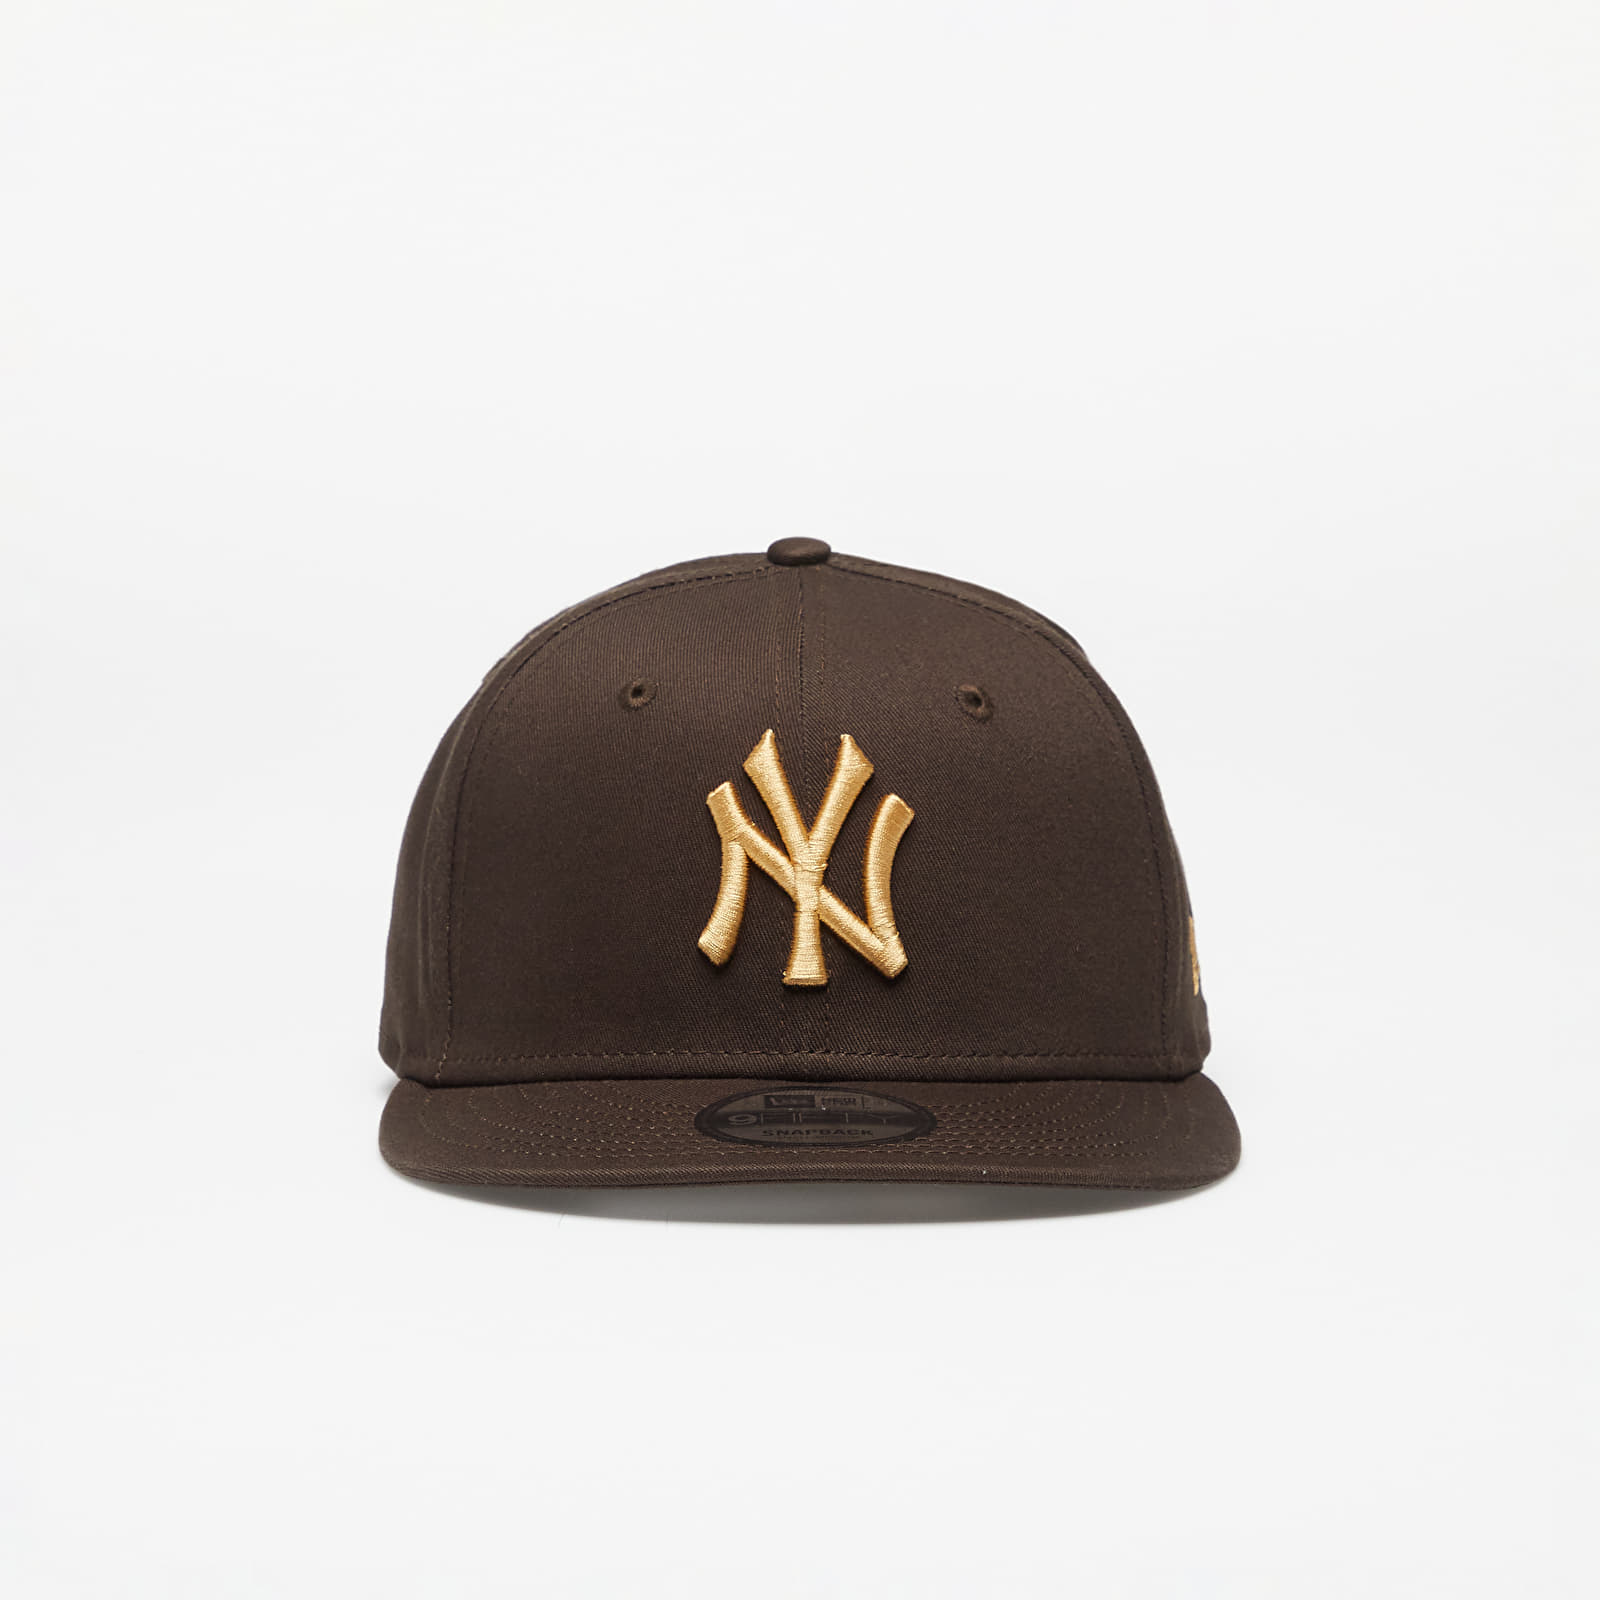 New Era - new york yankees league essential 9fifty snapback cap nfl brown suede/ bronze